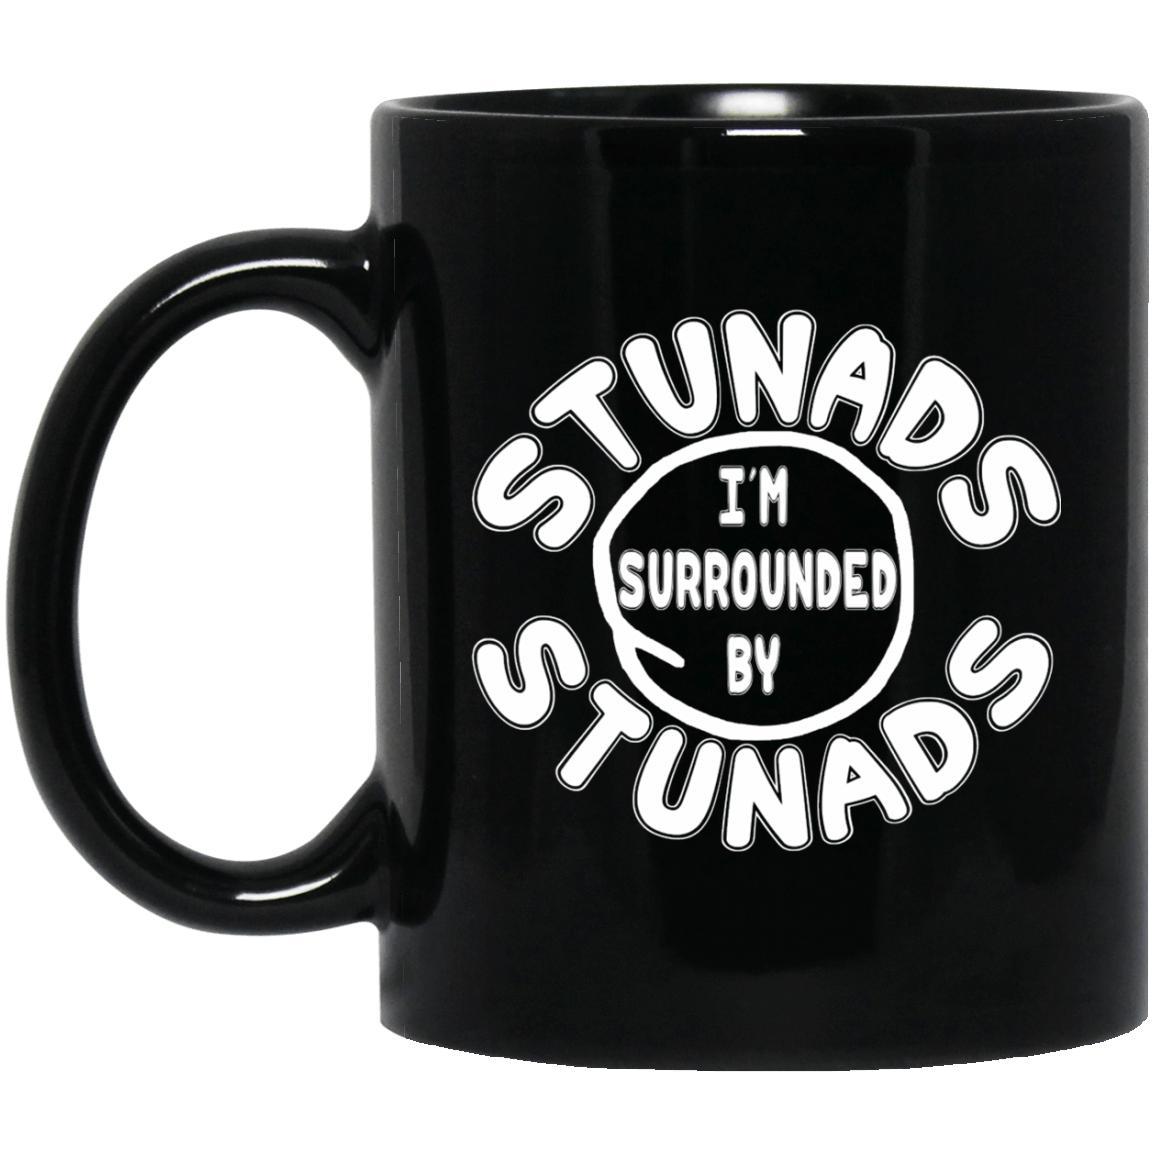 Surrounded By Stunads Mugs